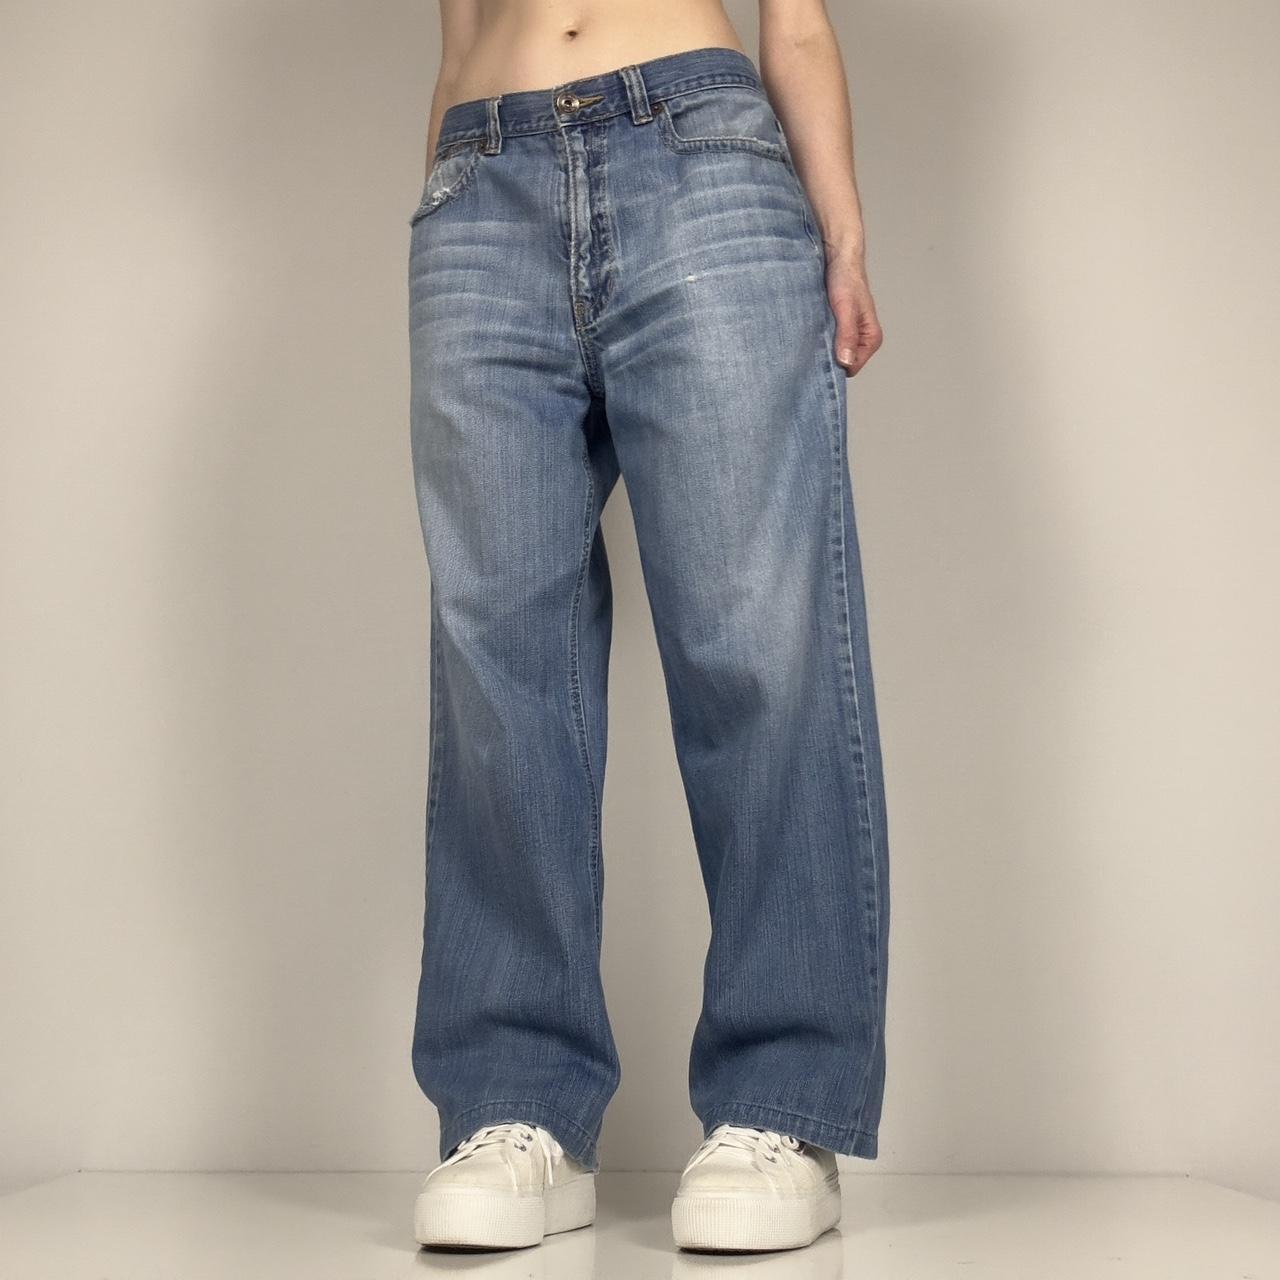 DKNY Men's Blue Jeans (2)